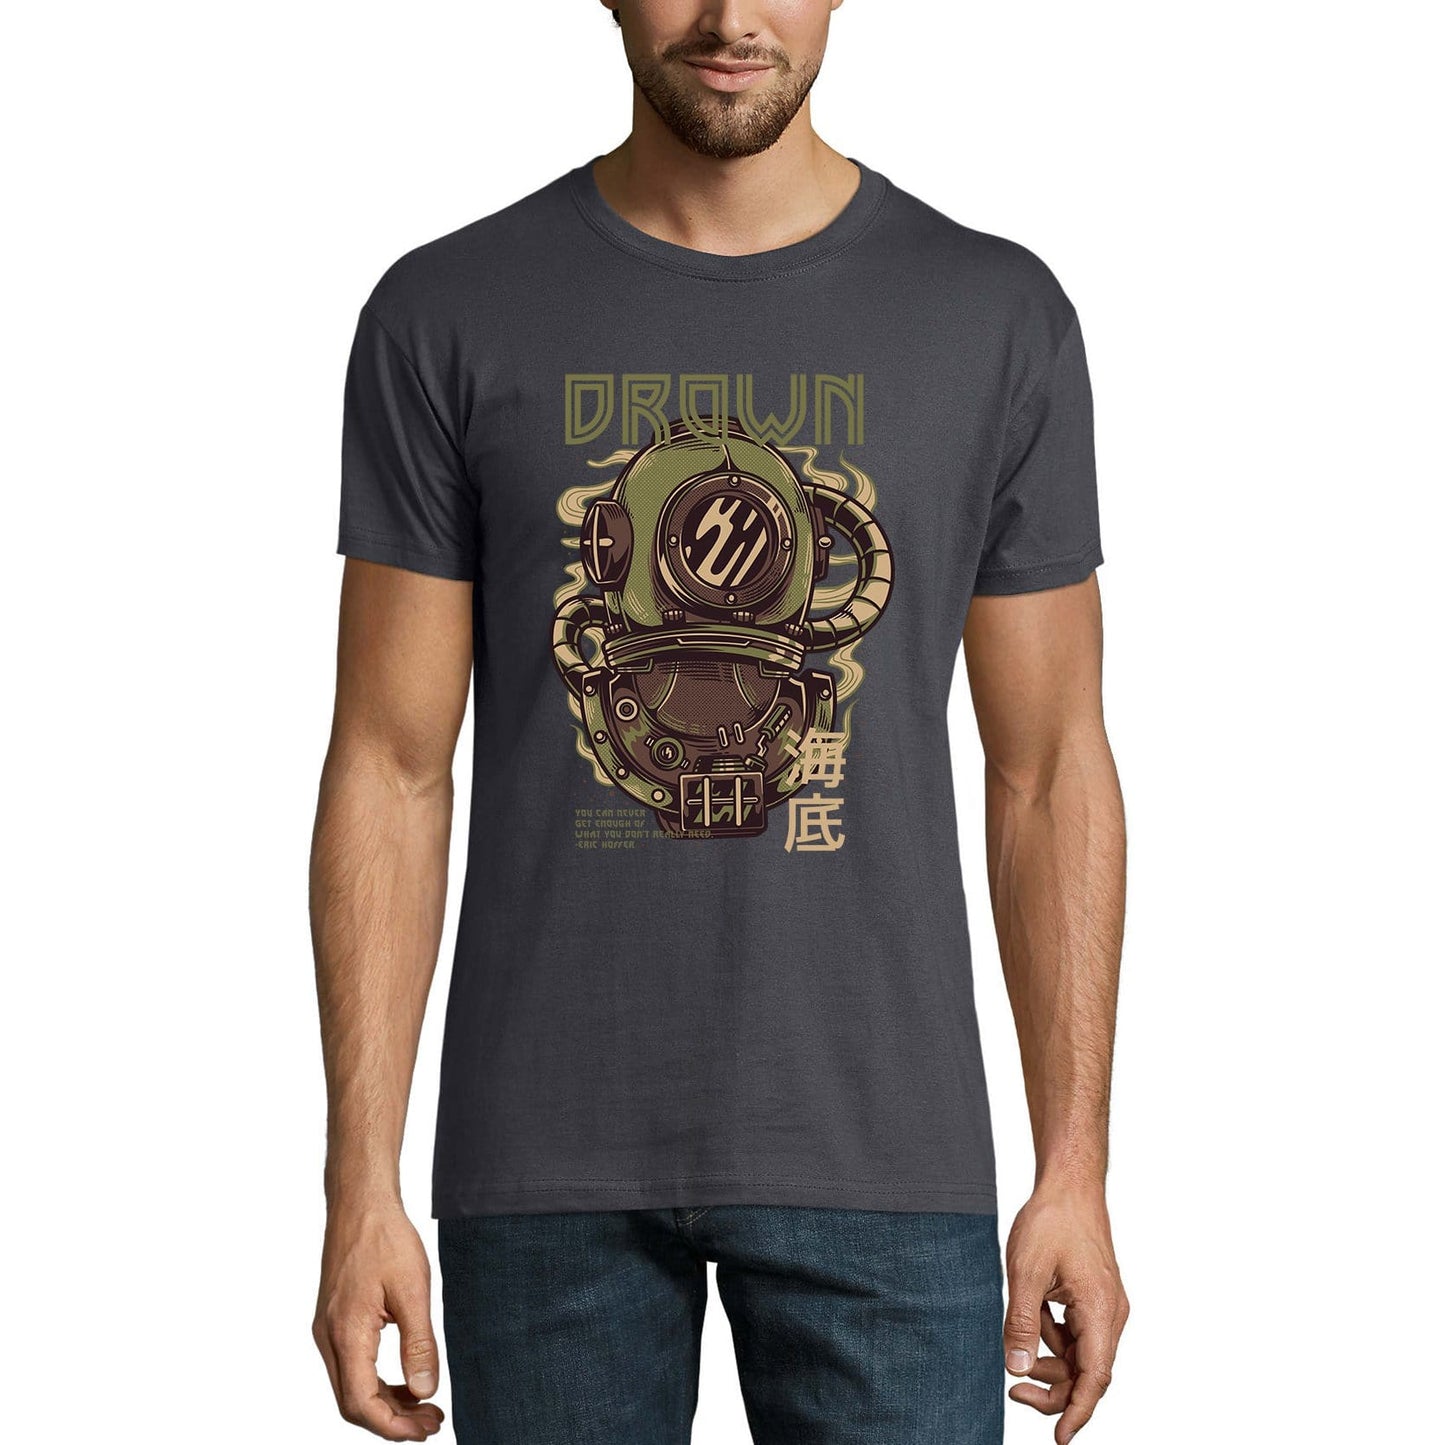 ULTRABASIC Herren-Neuheits-T-Shirt Drown – lustiges T-Shirt